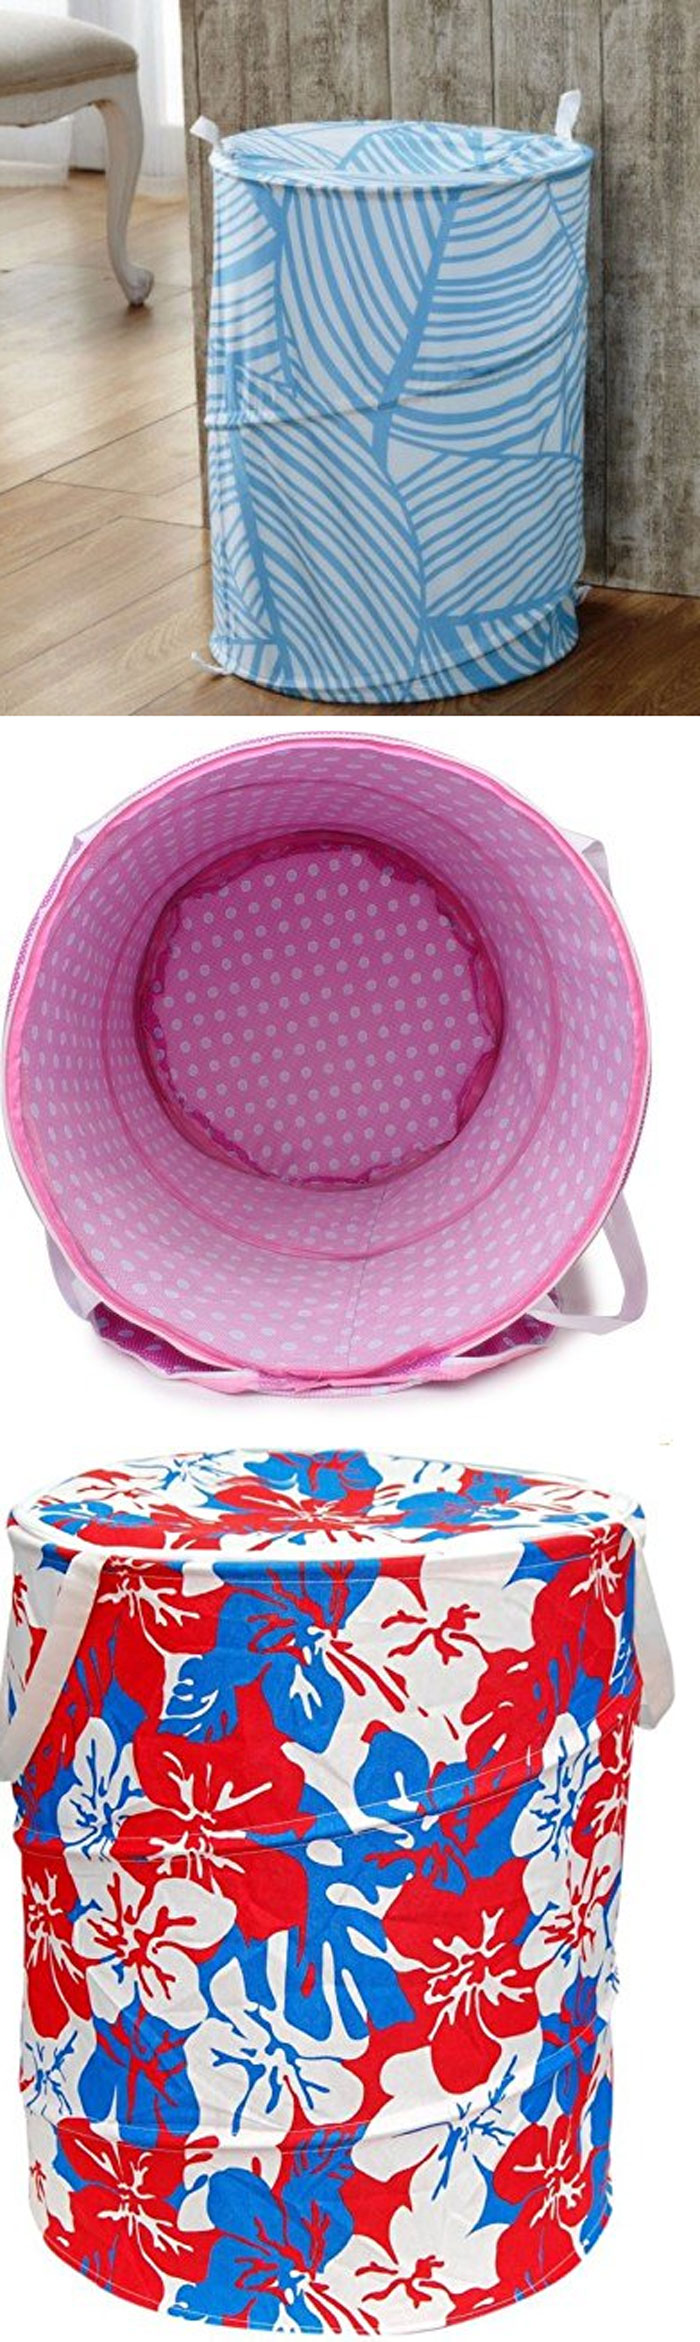 Kids Mandi Polyester Laundry Basket with Zippered Lid 15 x16-inch -1 Pcs